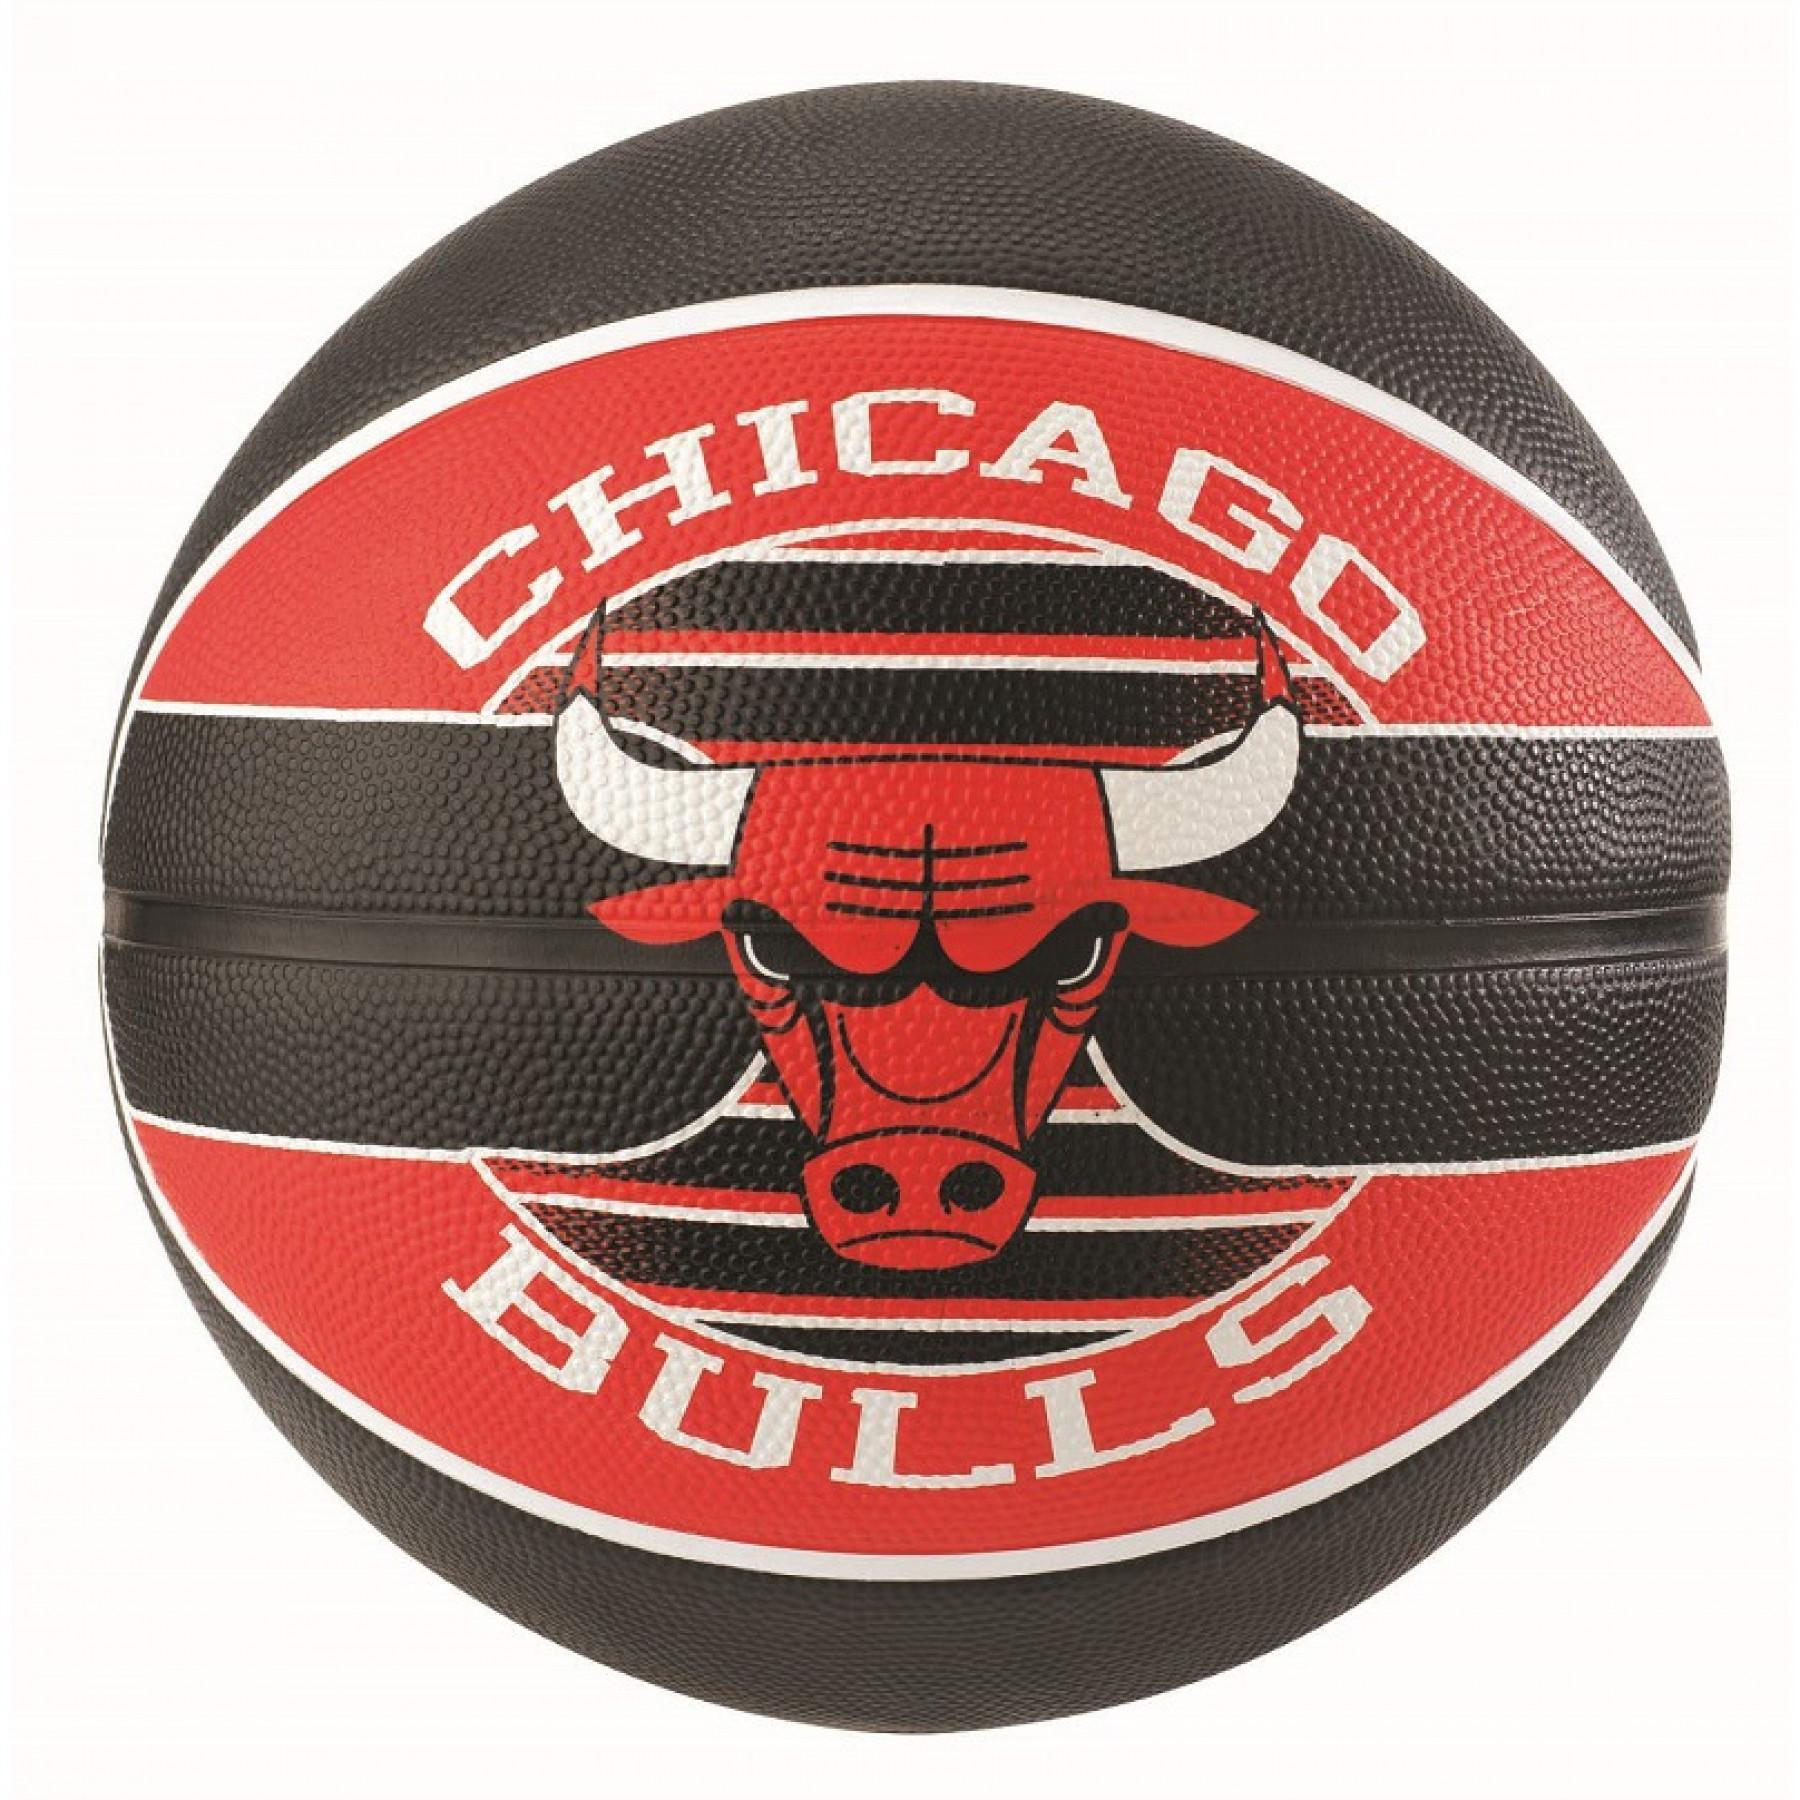 Balão Spalding NBA team ball Chicago Bulls